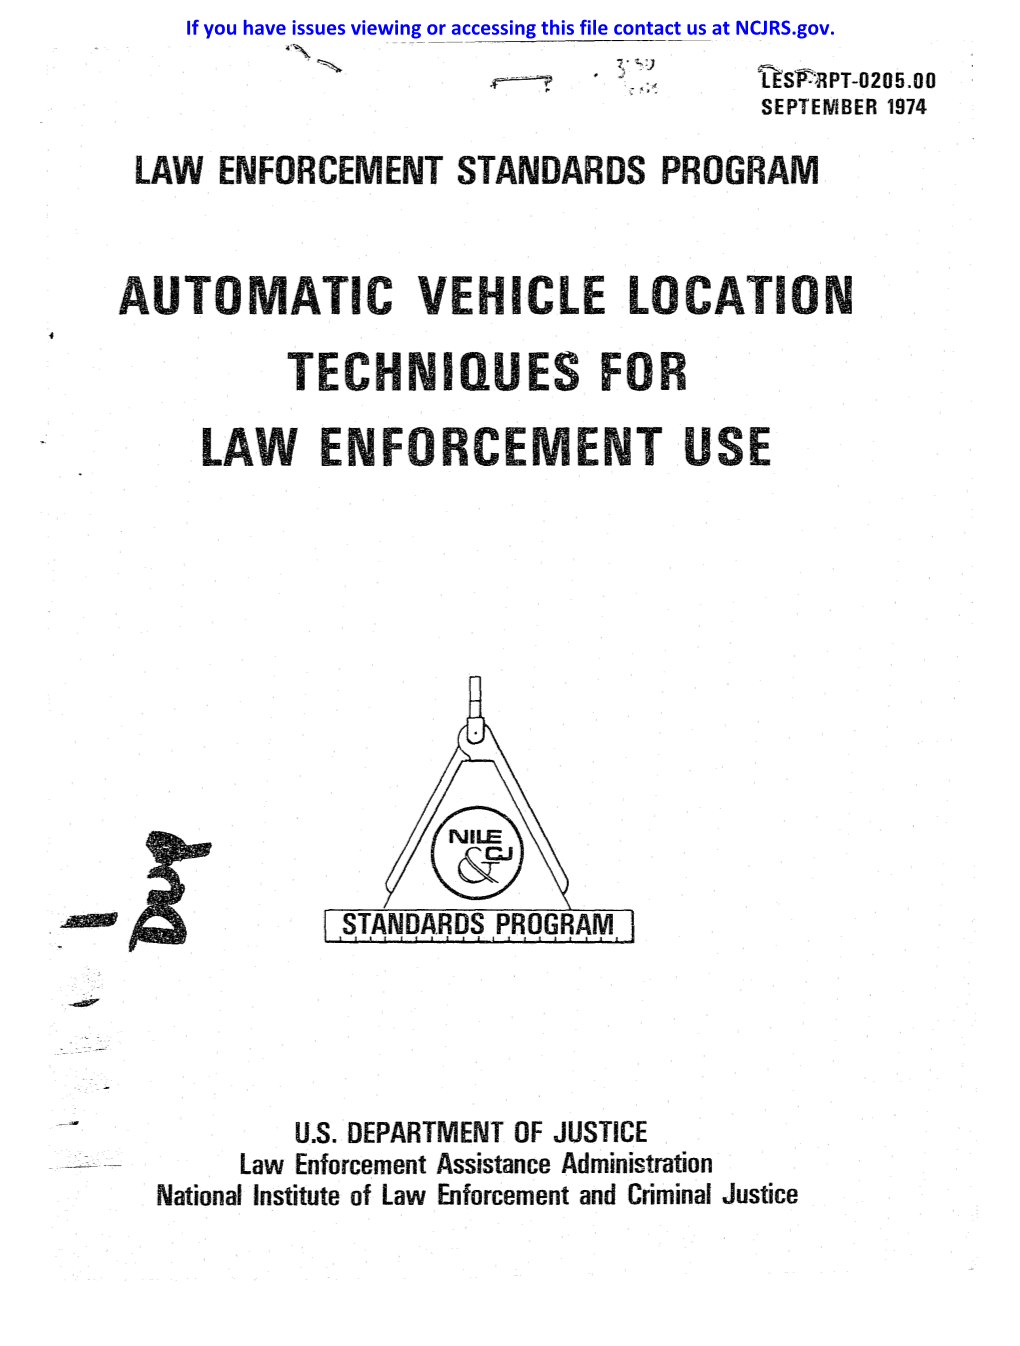 Automatic Vehicle Location Techniques for Law Enforce Ent Use